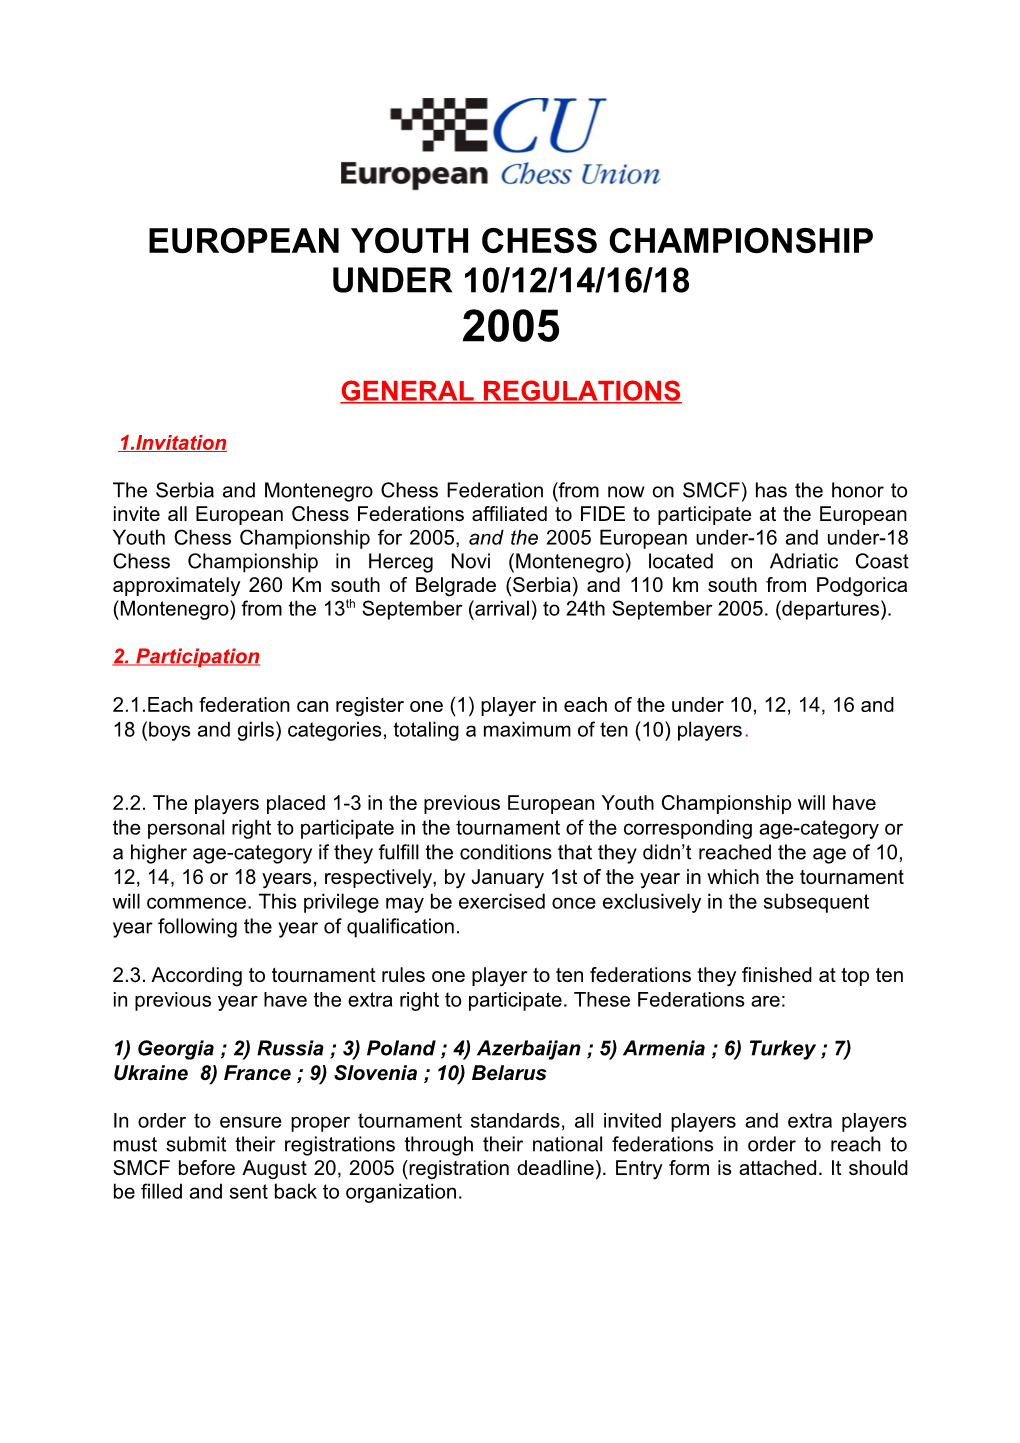 2005 European Youth Chess Championship